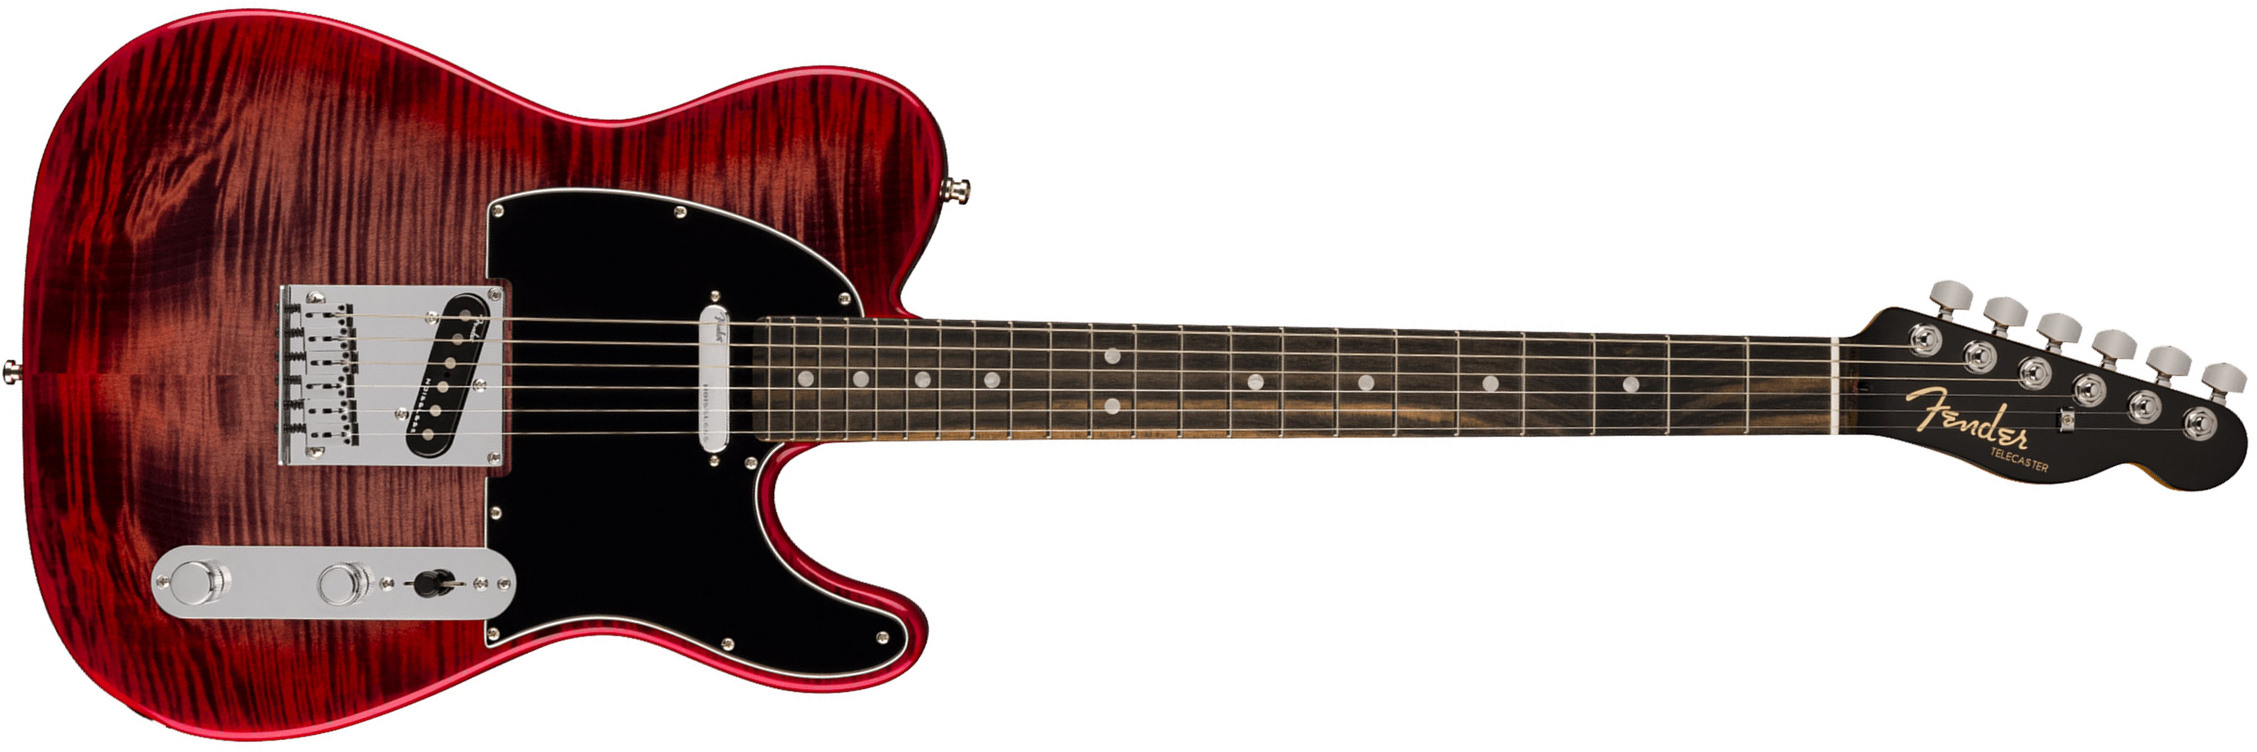 Fender Tele American Ultra Ltd Usa 2s Ht Eb - Umbra - Televorm elektrische gitaar - Main picture